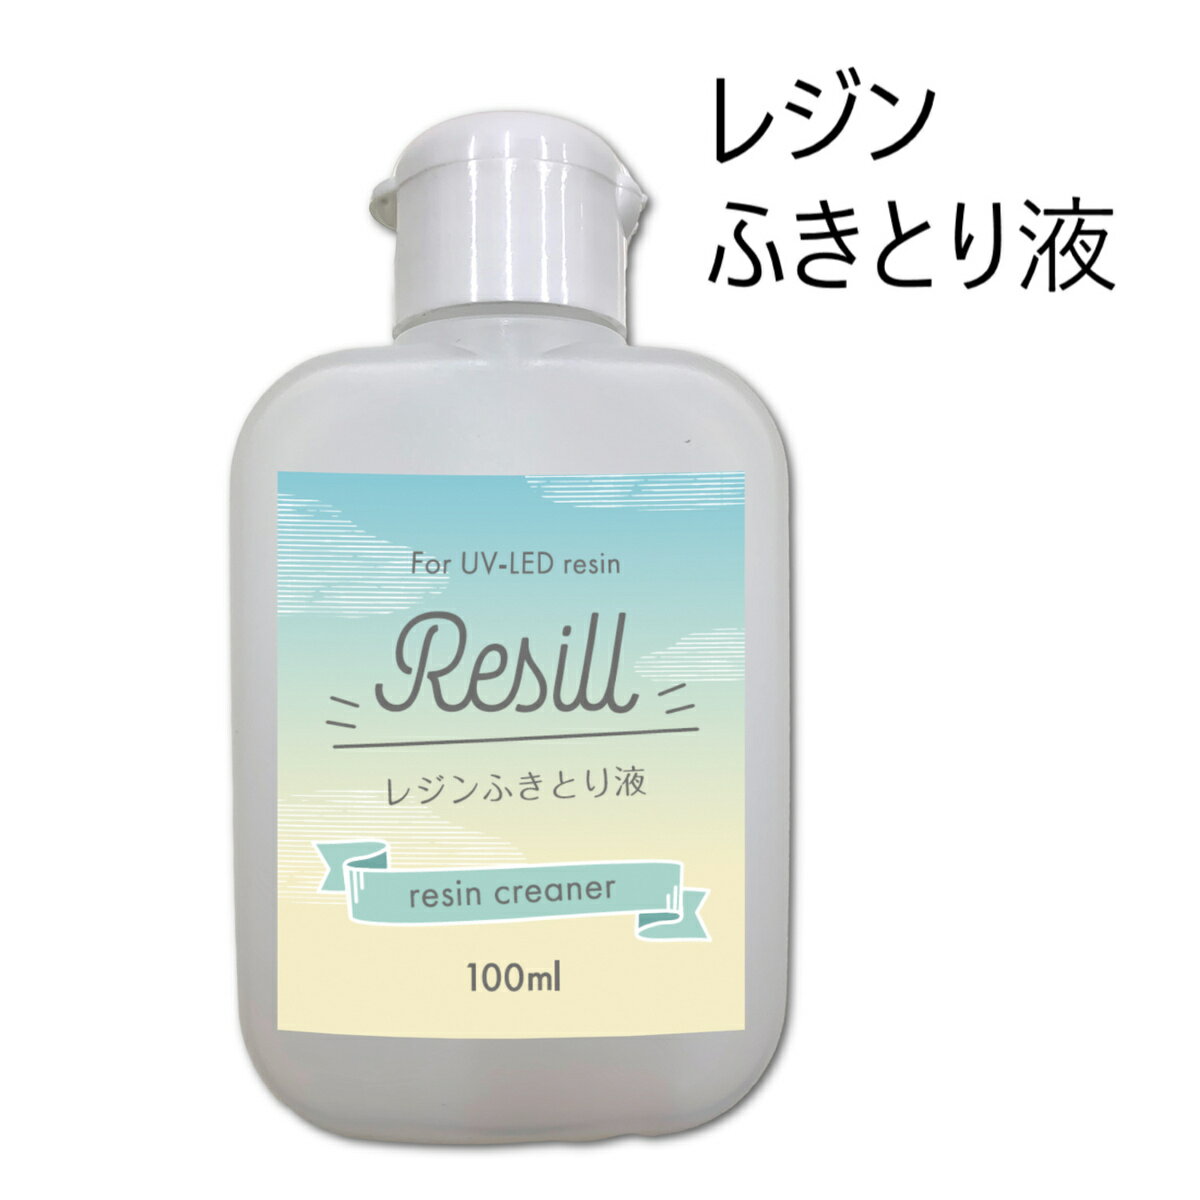 Resill レジンふきとり液 レジン用クリーナー 100ml シリコン型・用具のお手入れに 日本製